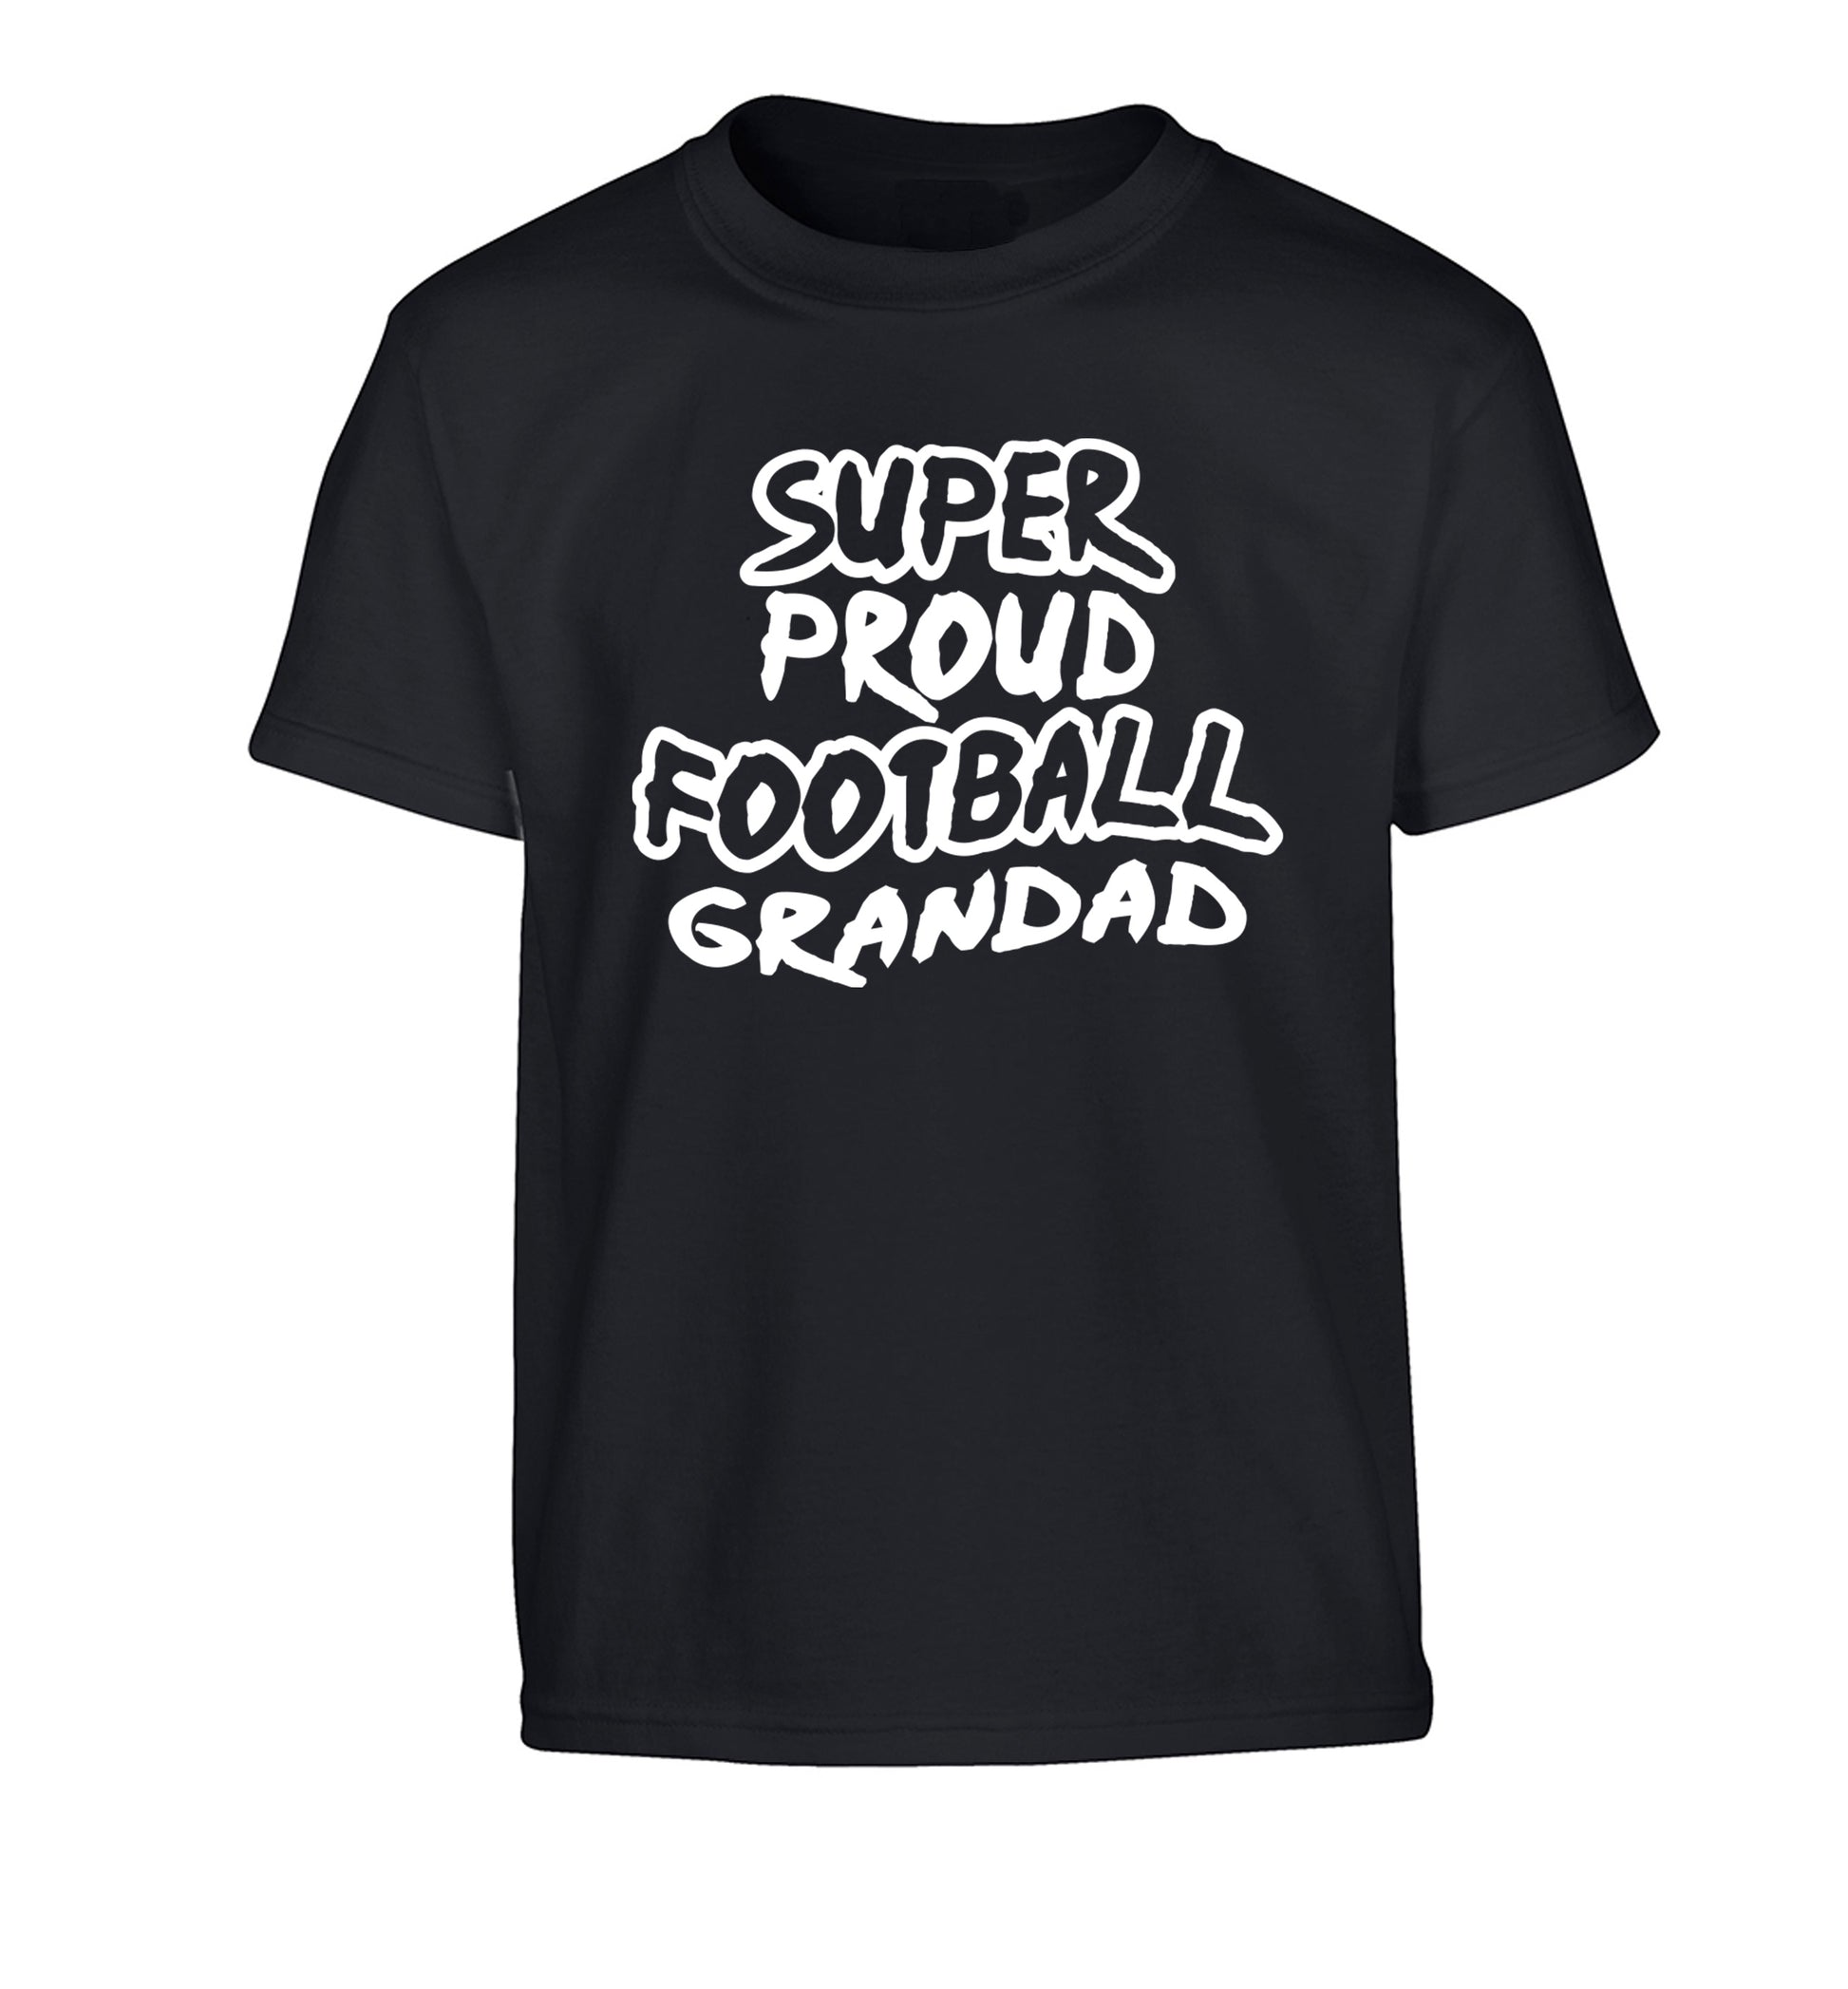 Super proud football grandad Children's black Tshirt 12-14 Years